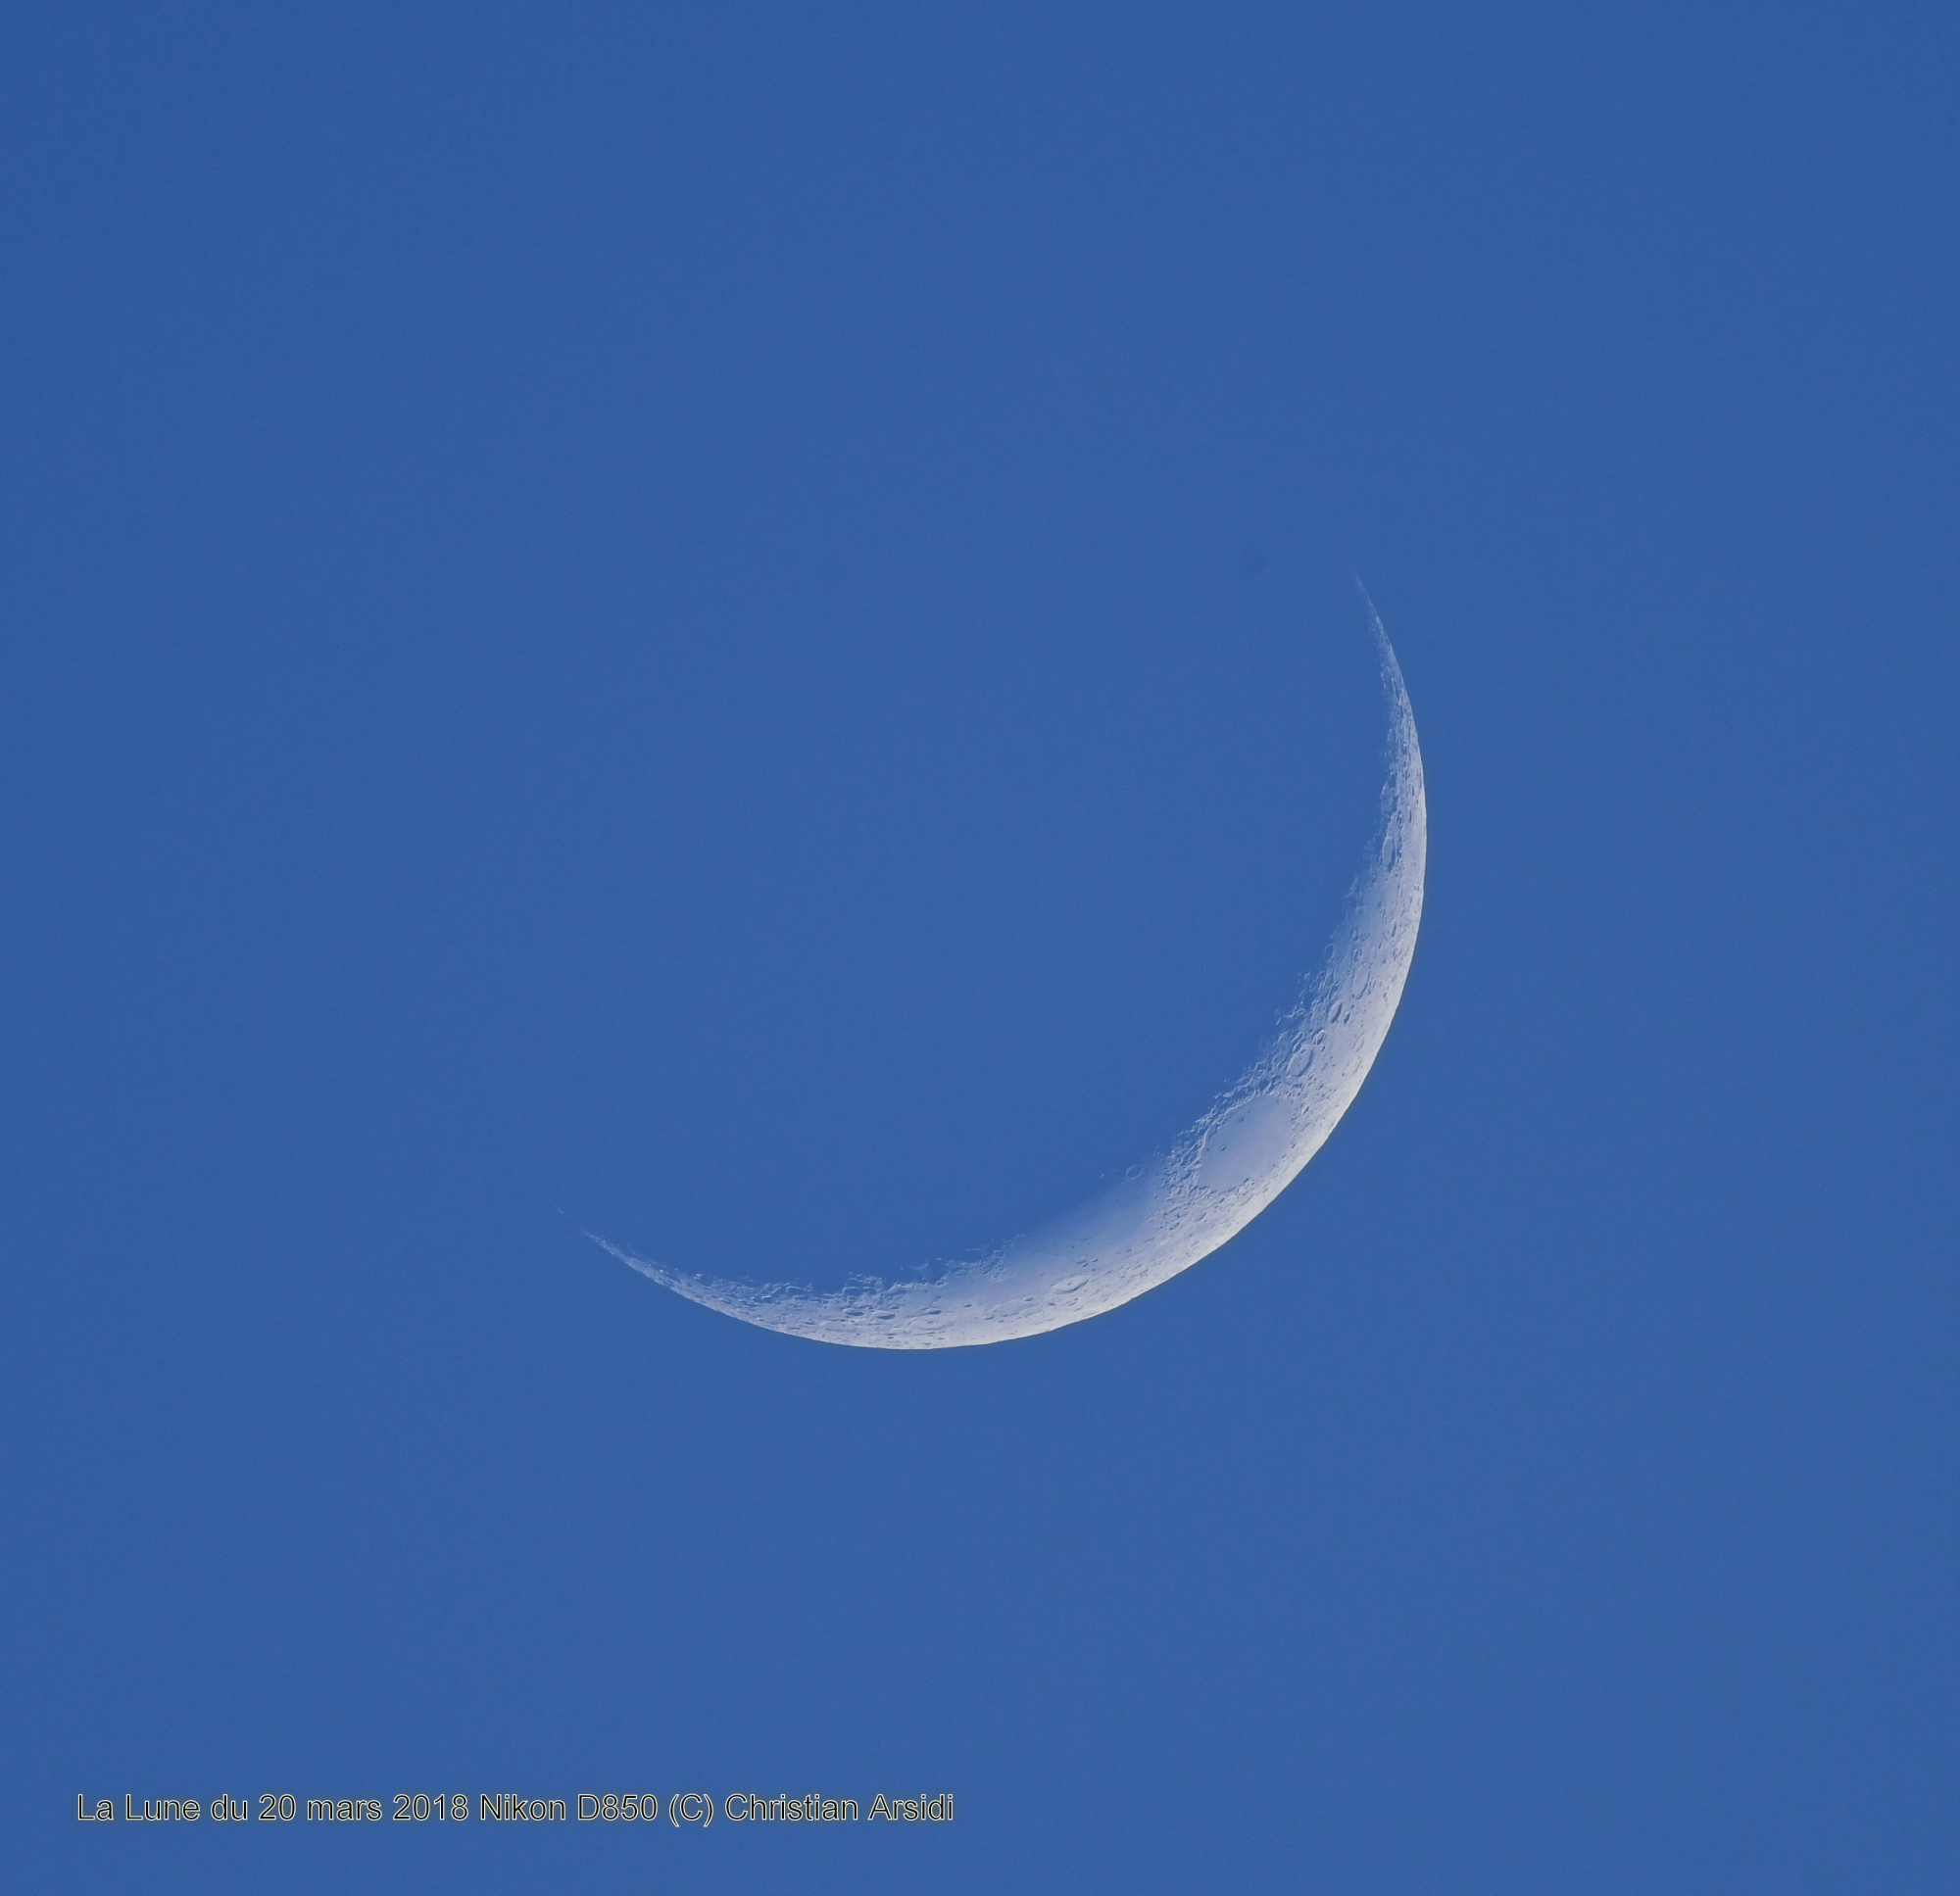 La Lune encore jour_DxO JPEG.jpg